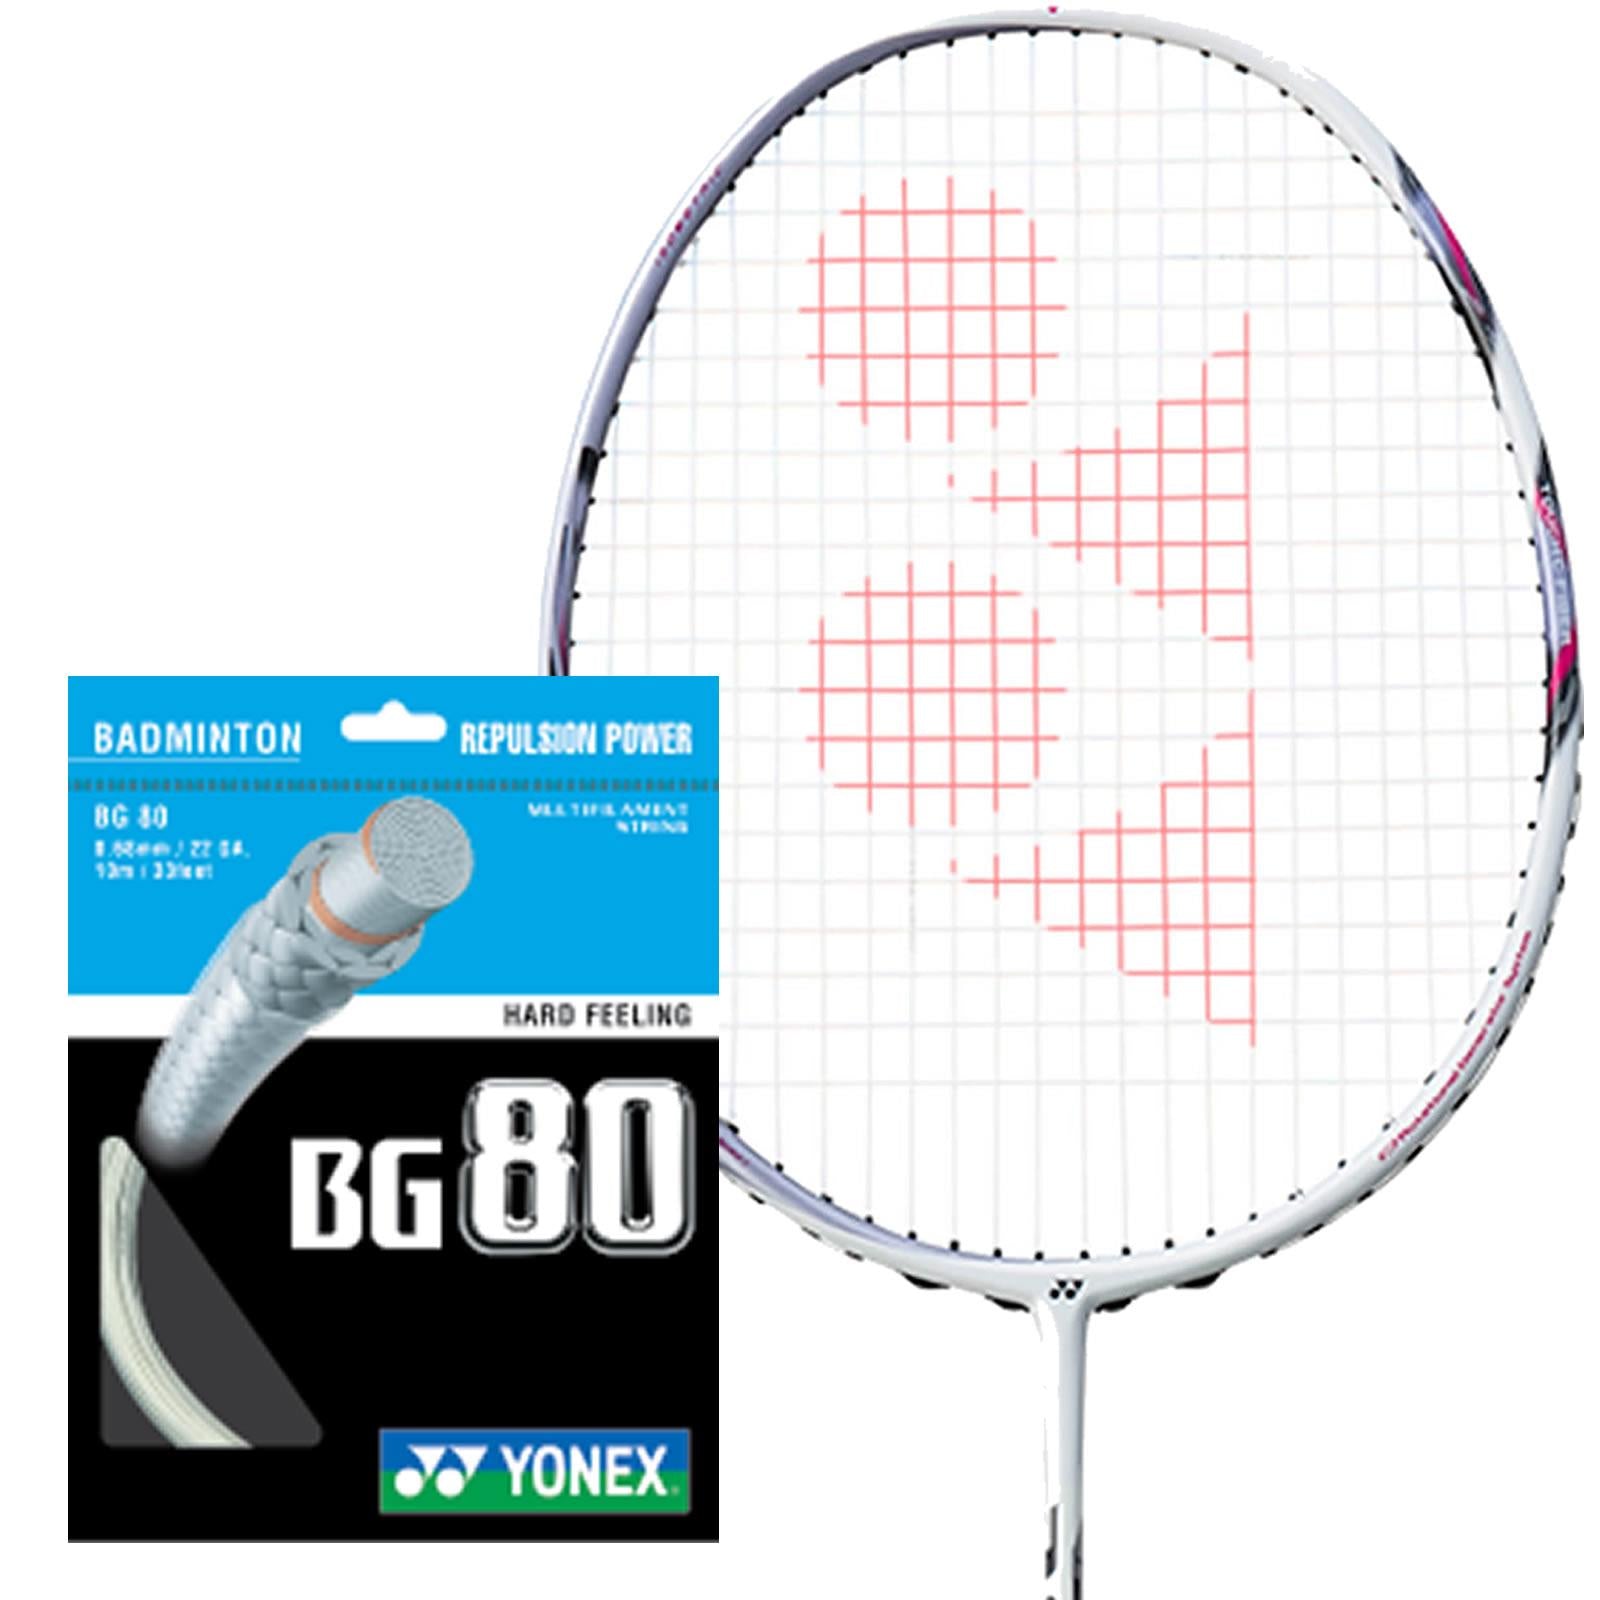 Yonex BG 80 Badminton String White - 0.68mm 10m Packet